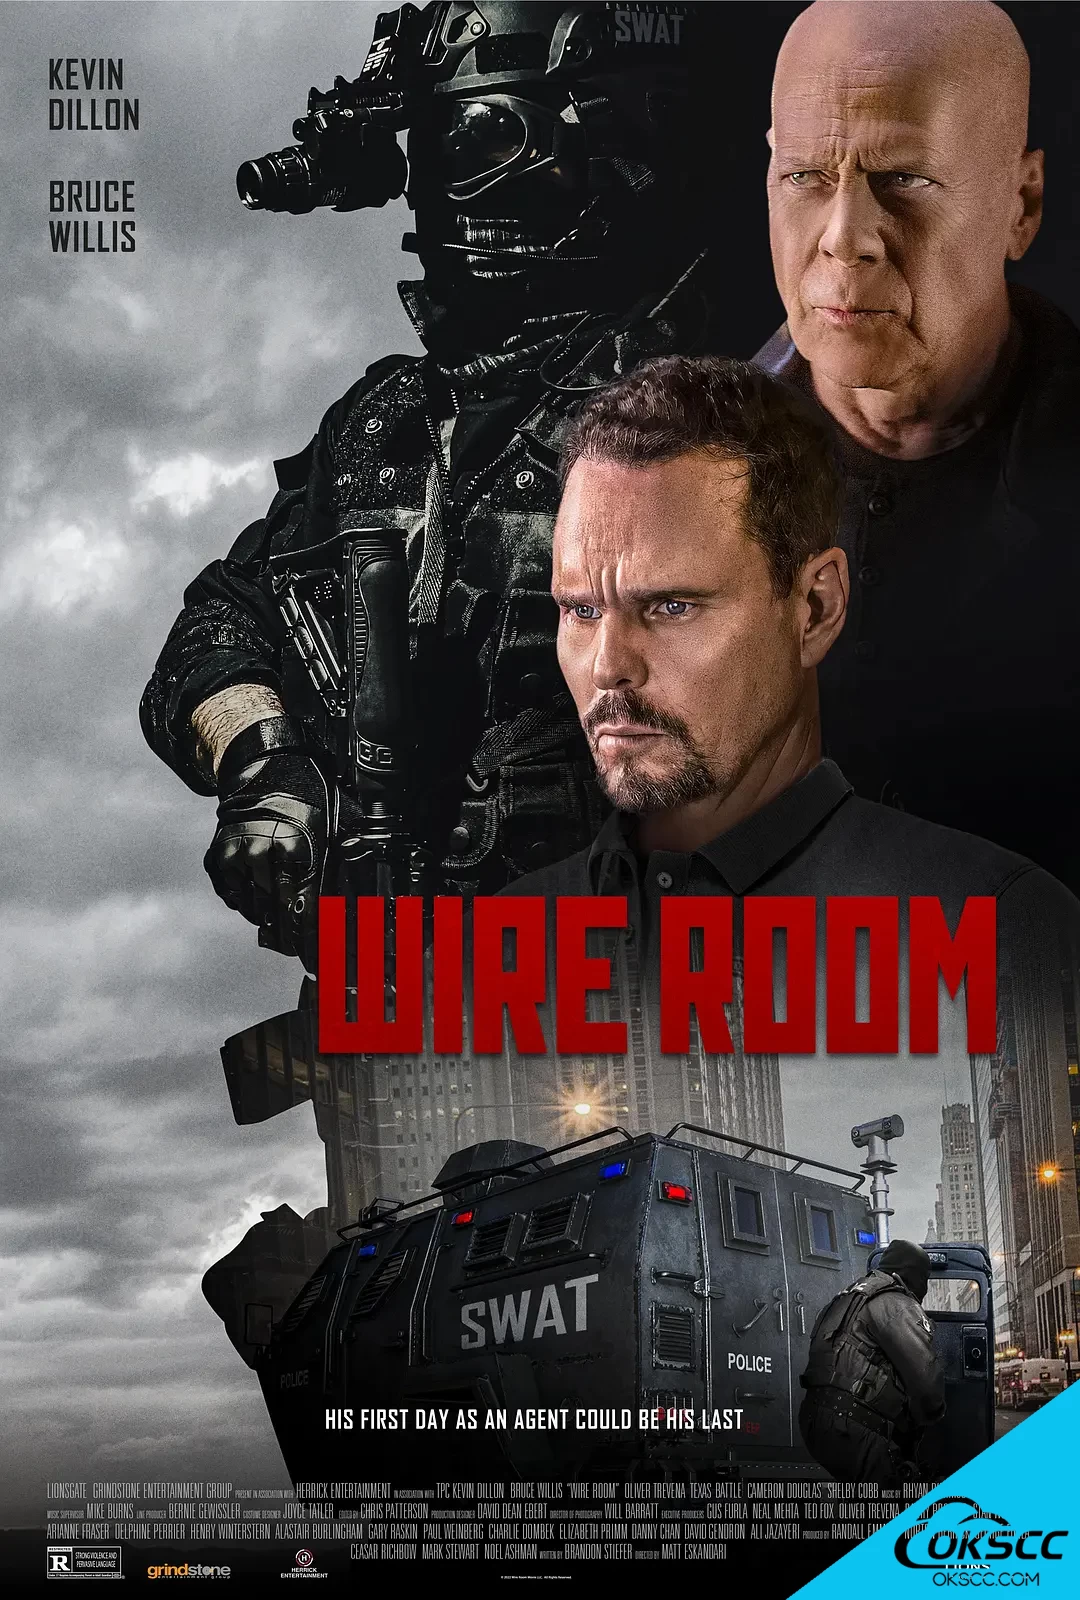 交易室 Wire Room (2022)